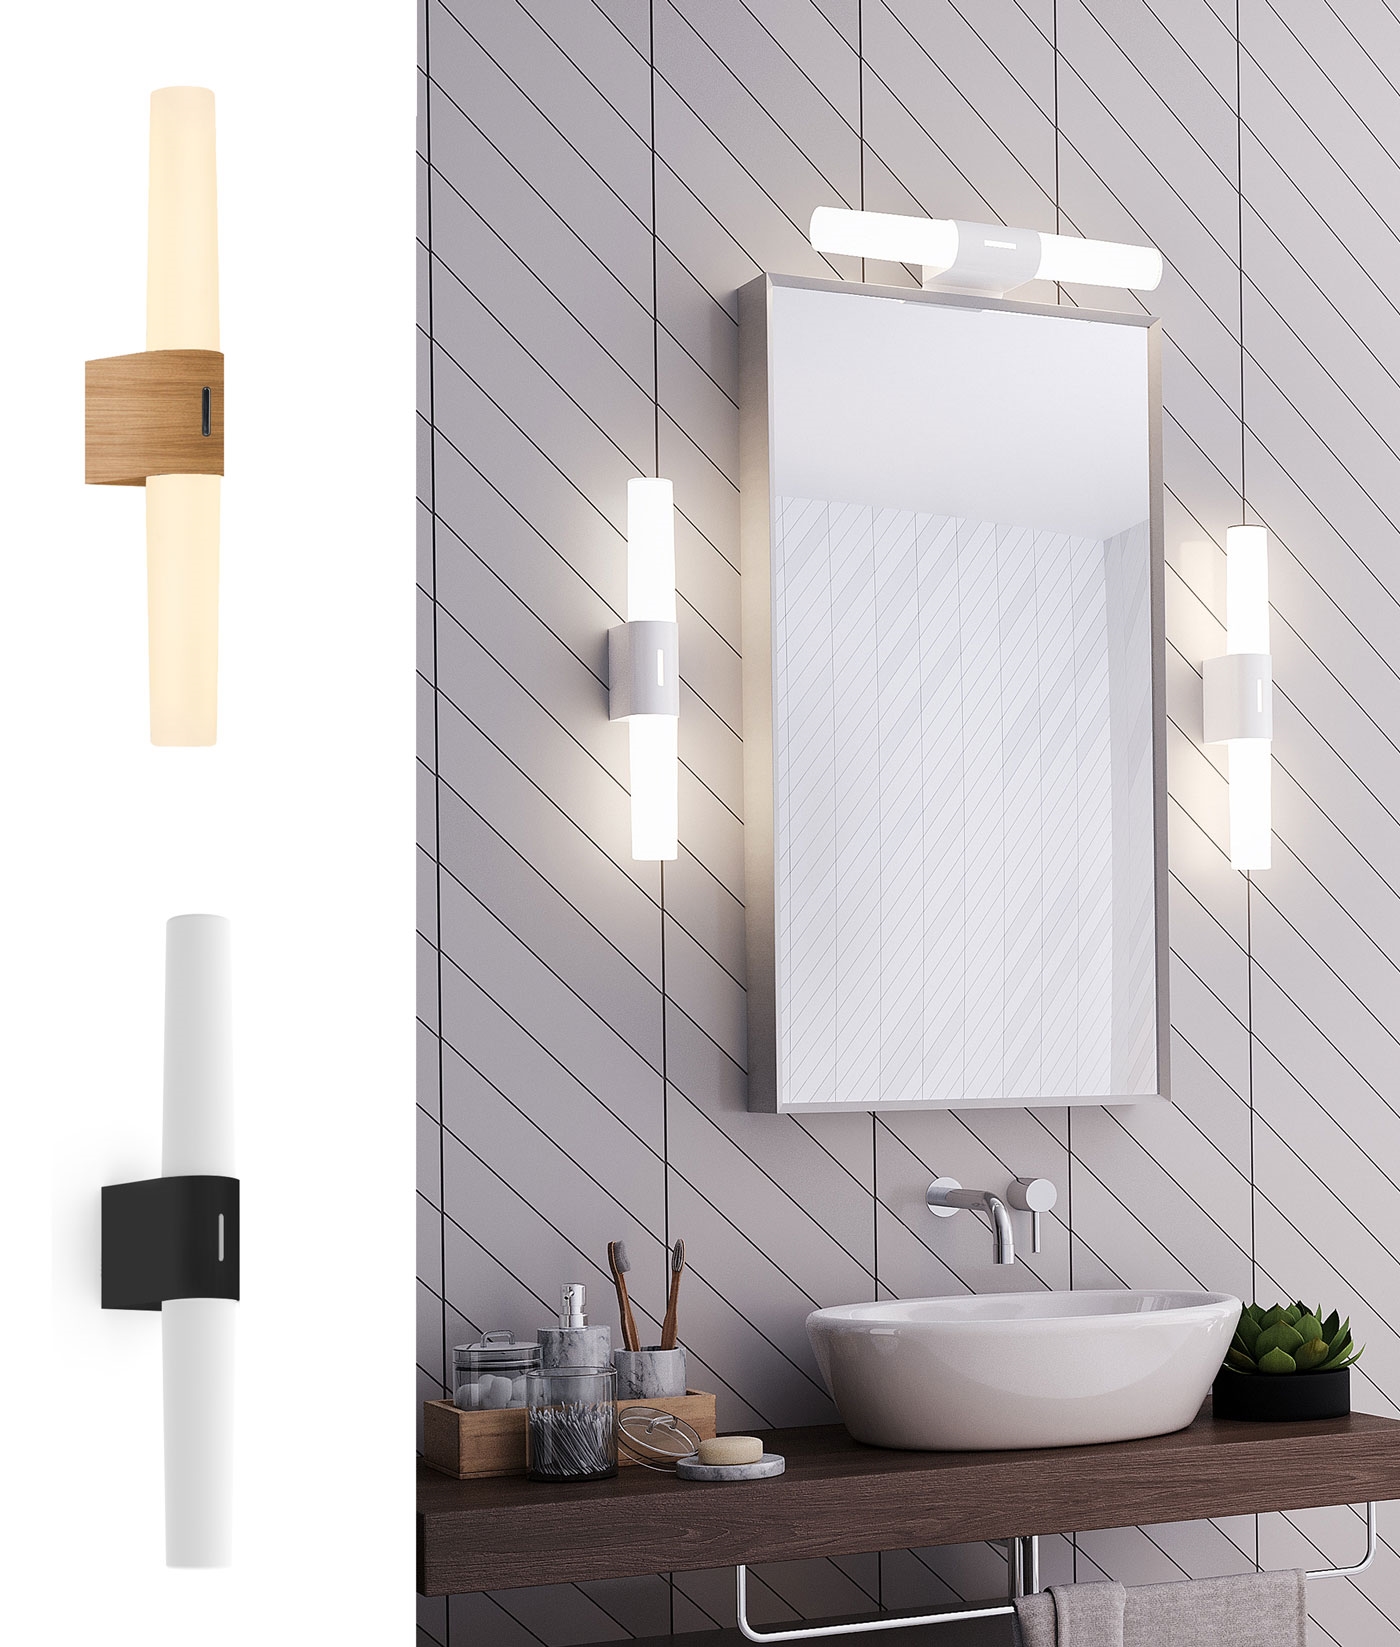 LED Bathroom Wall Light Horizontal or Vertical Installation